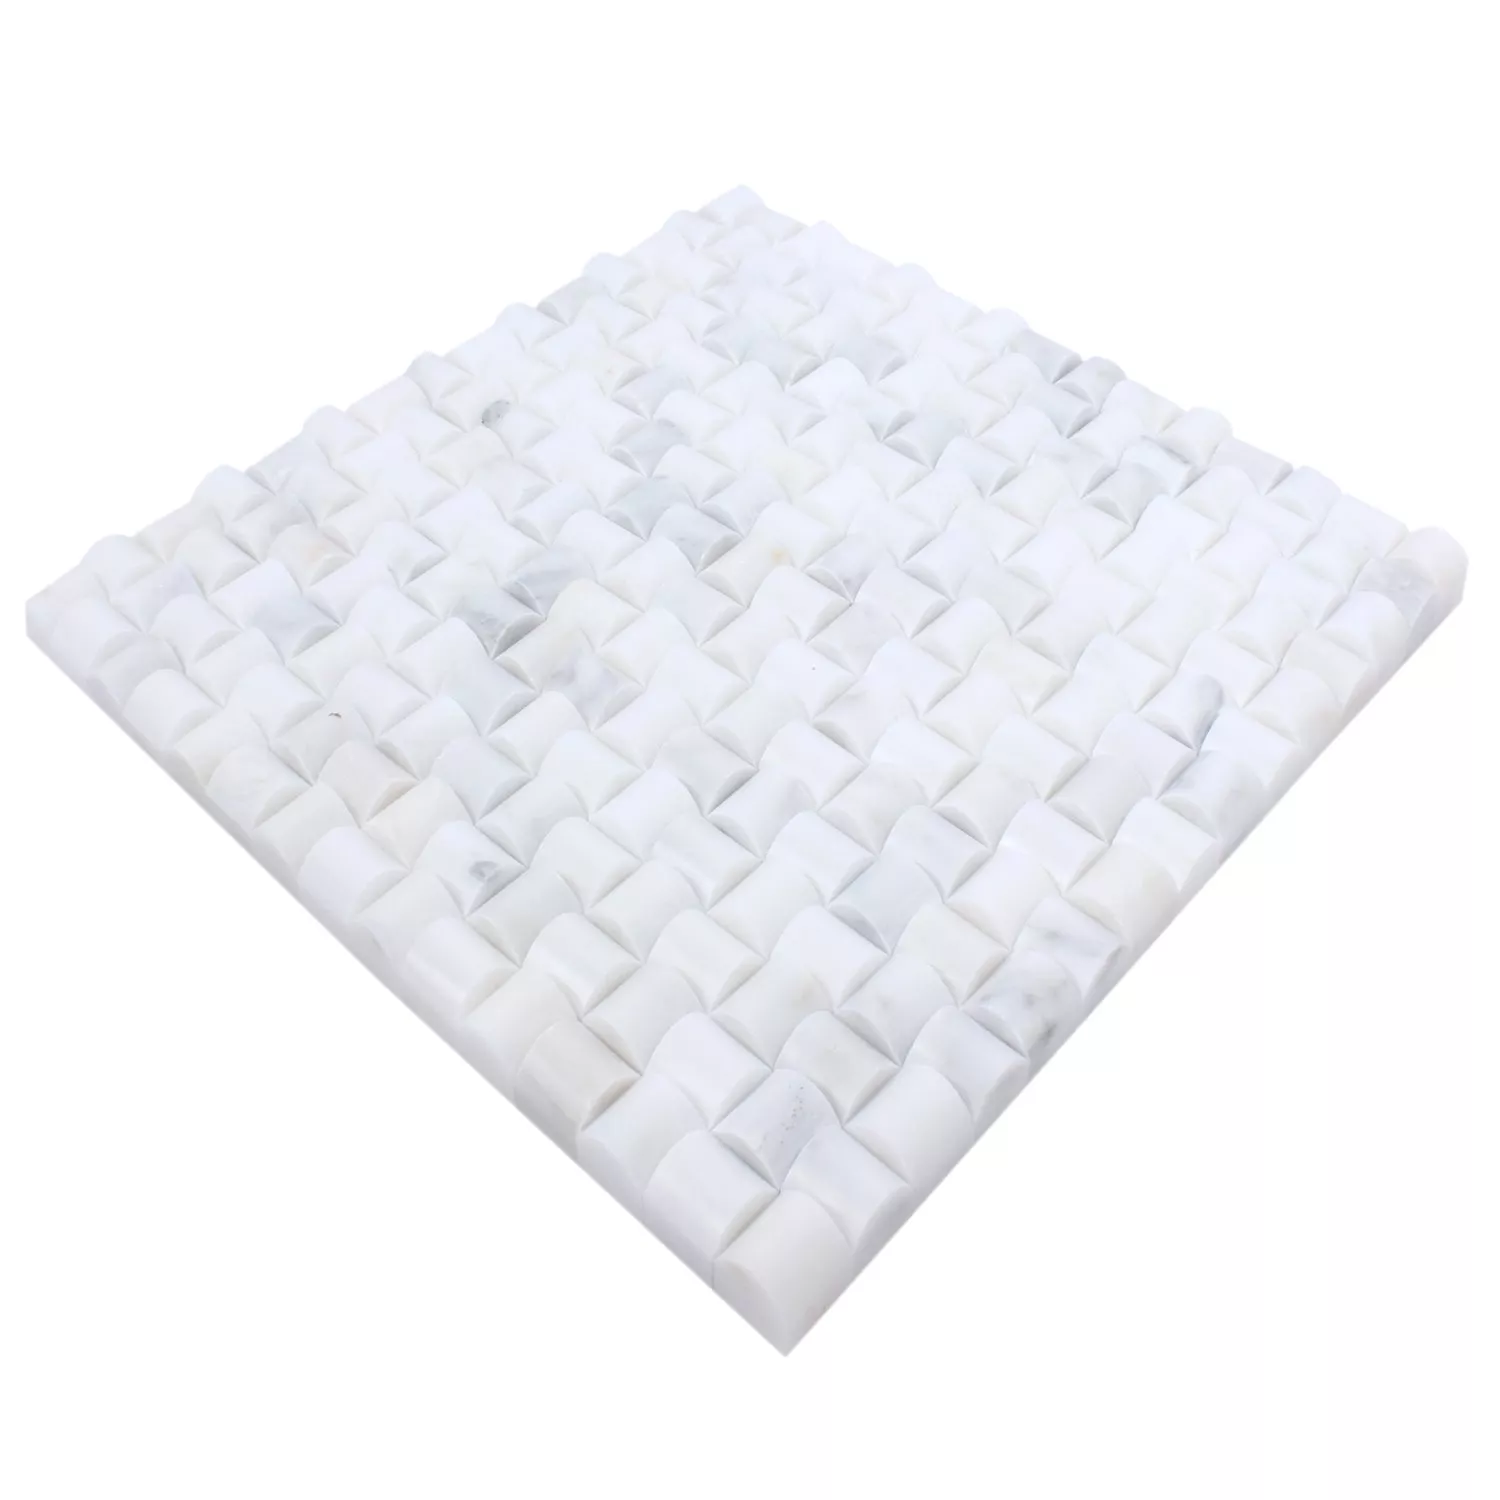 Sample Mosaic Tiles Natural Stone Everest D White